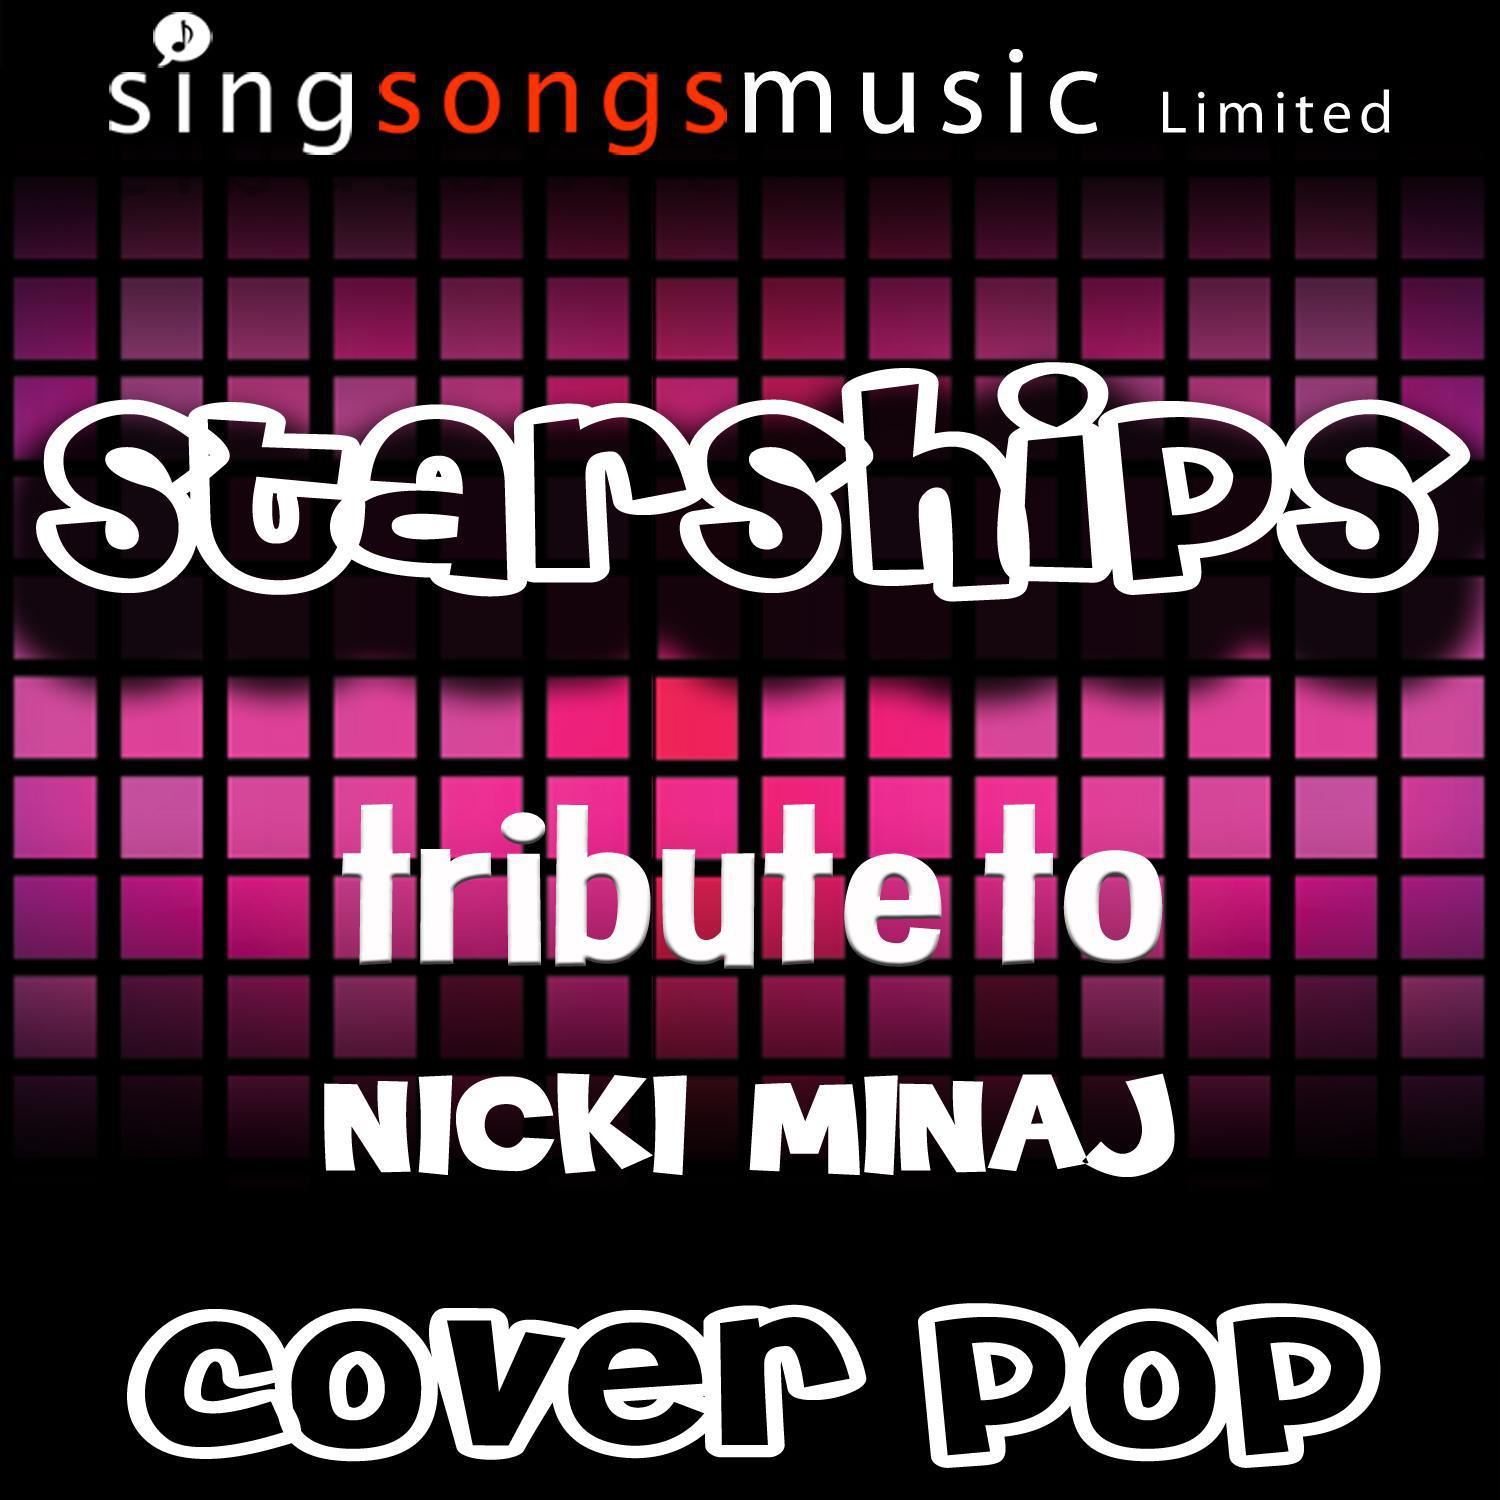 Starships (Tribute to Nicki Minaj)